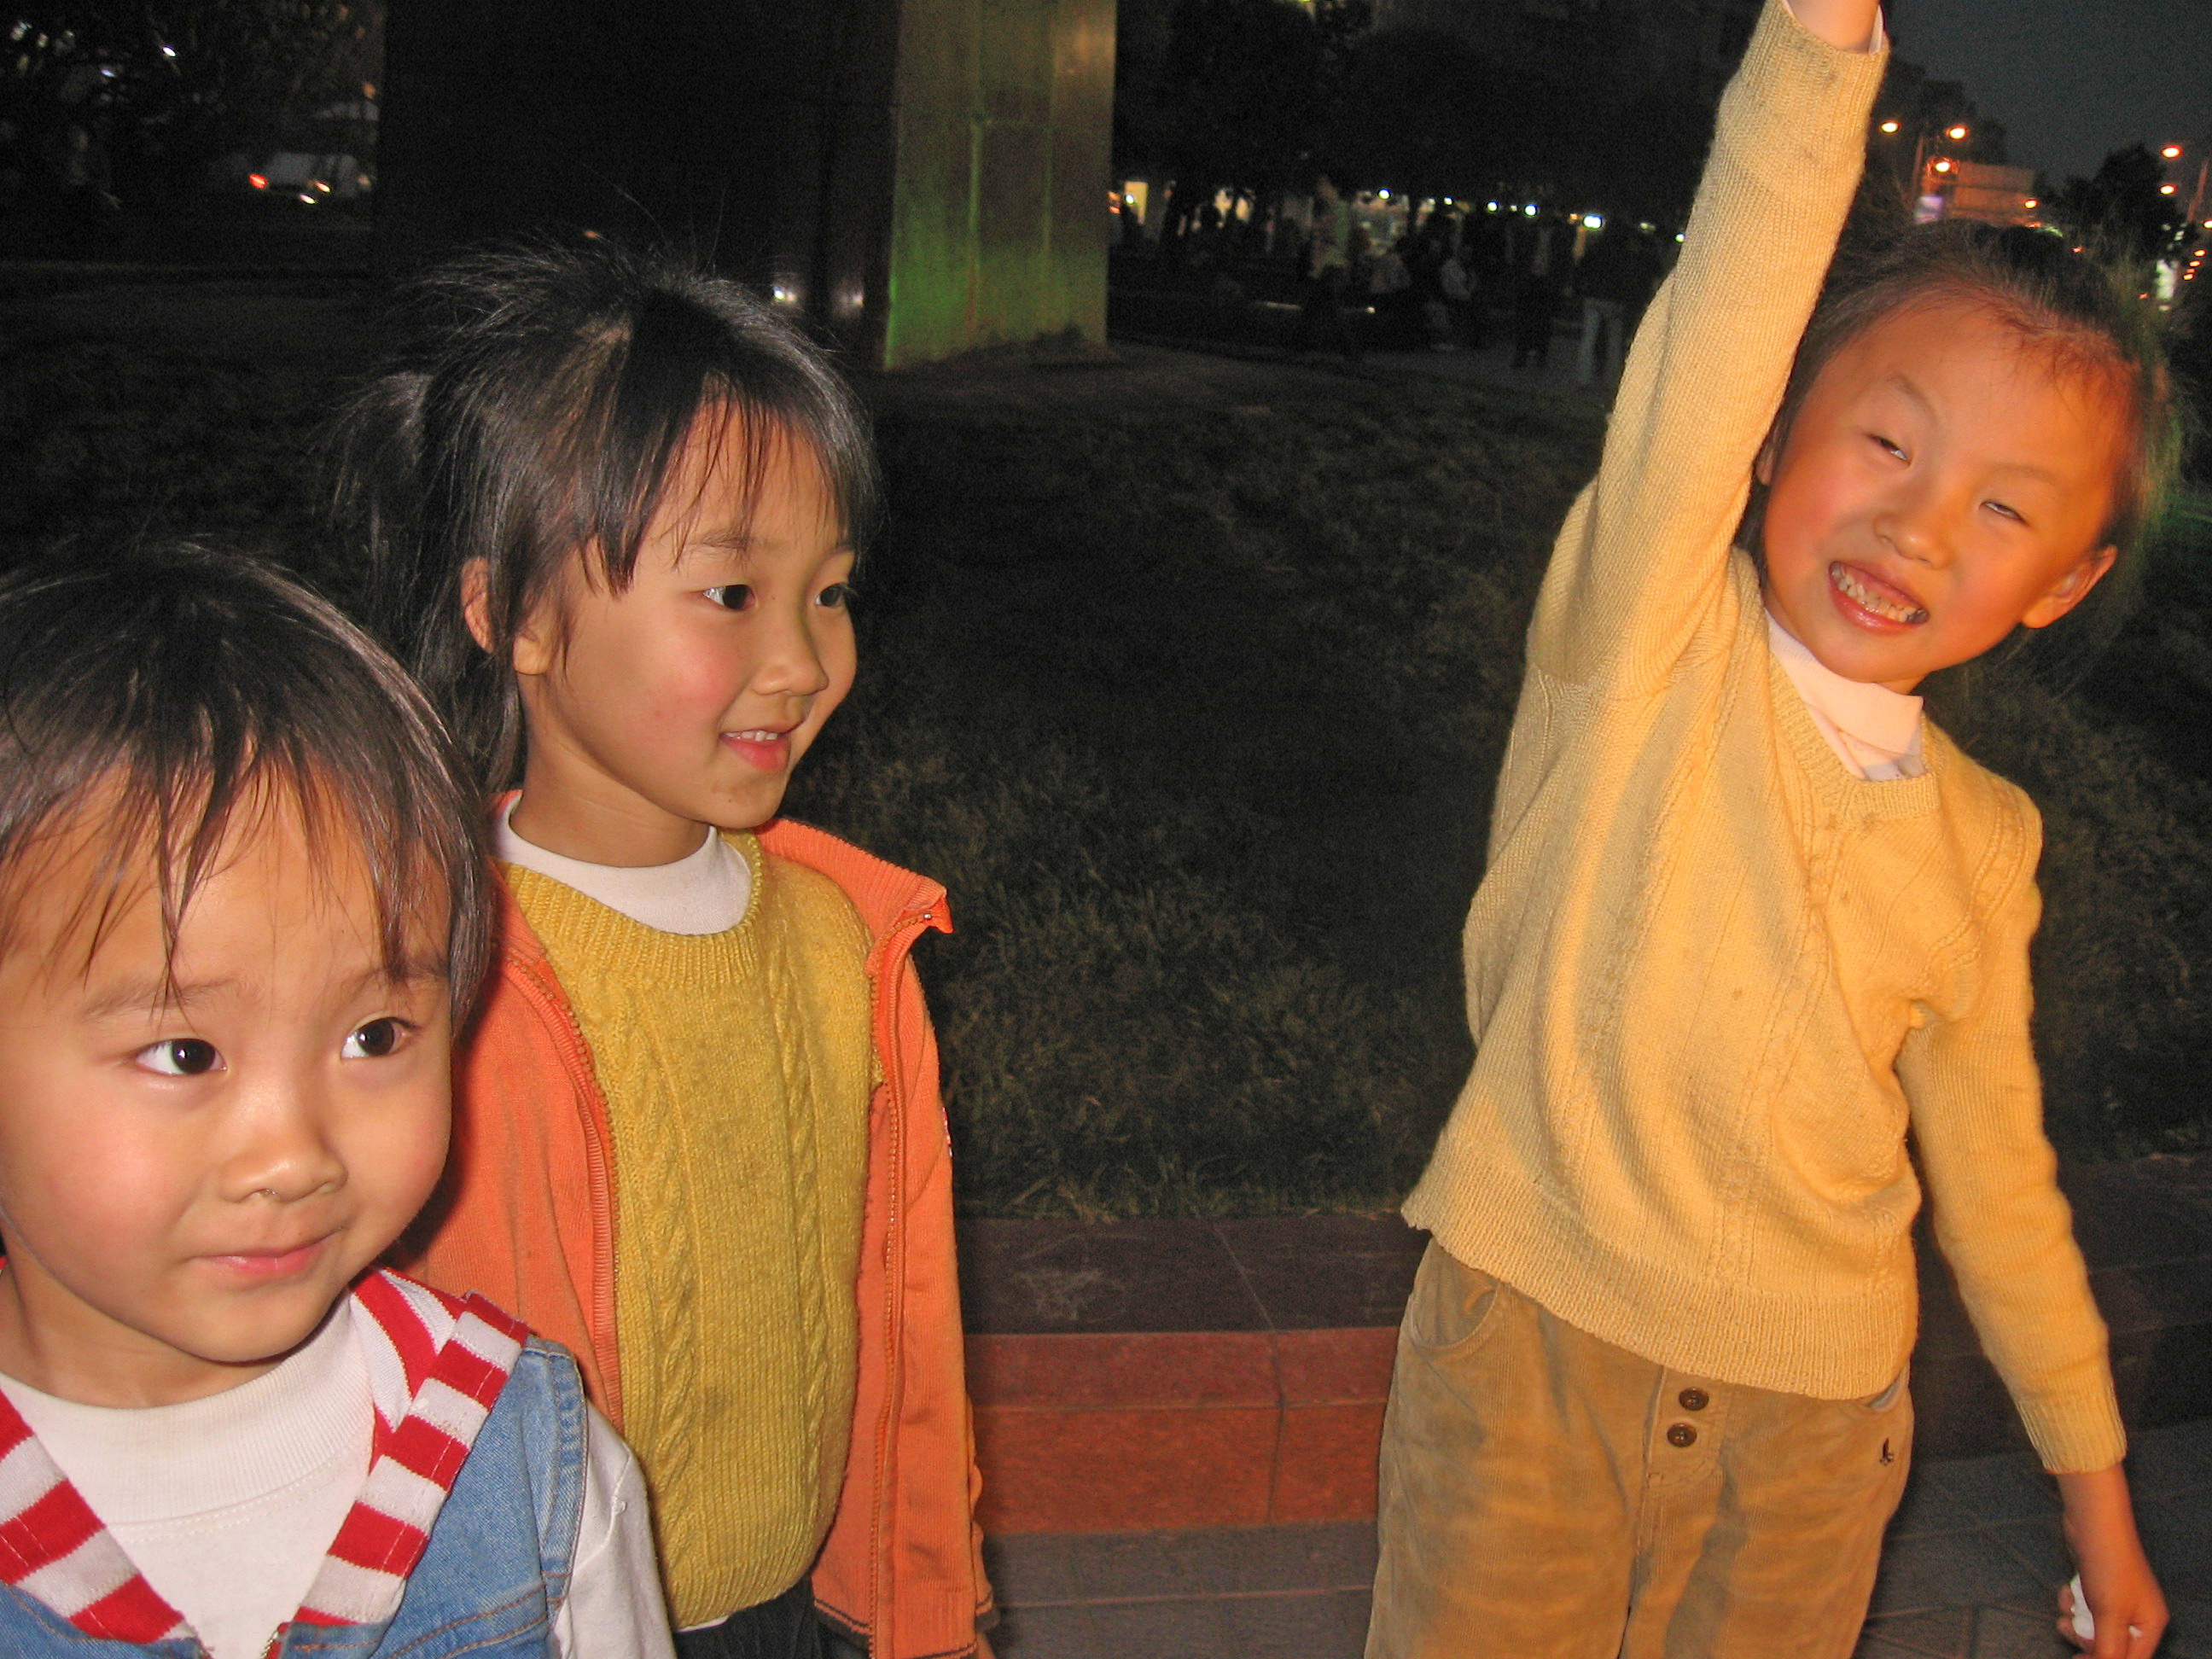 Children in China